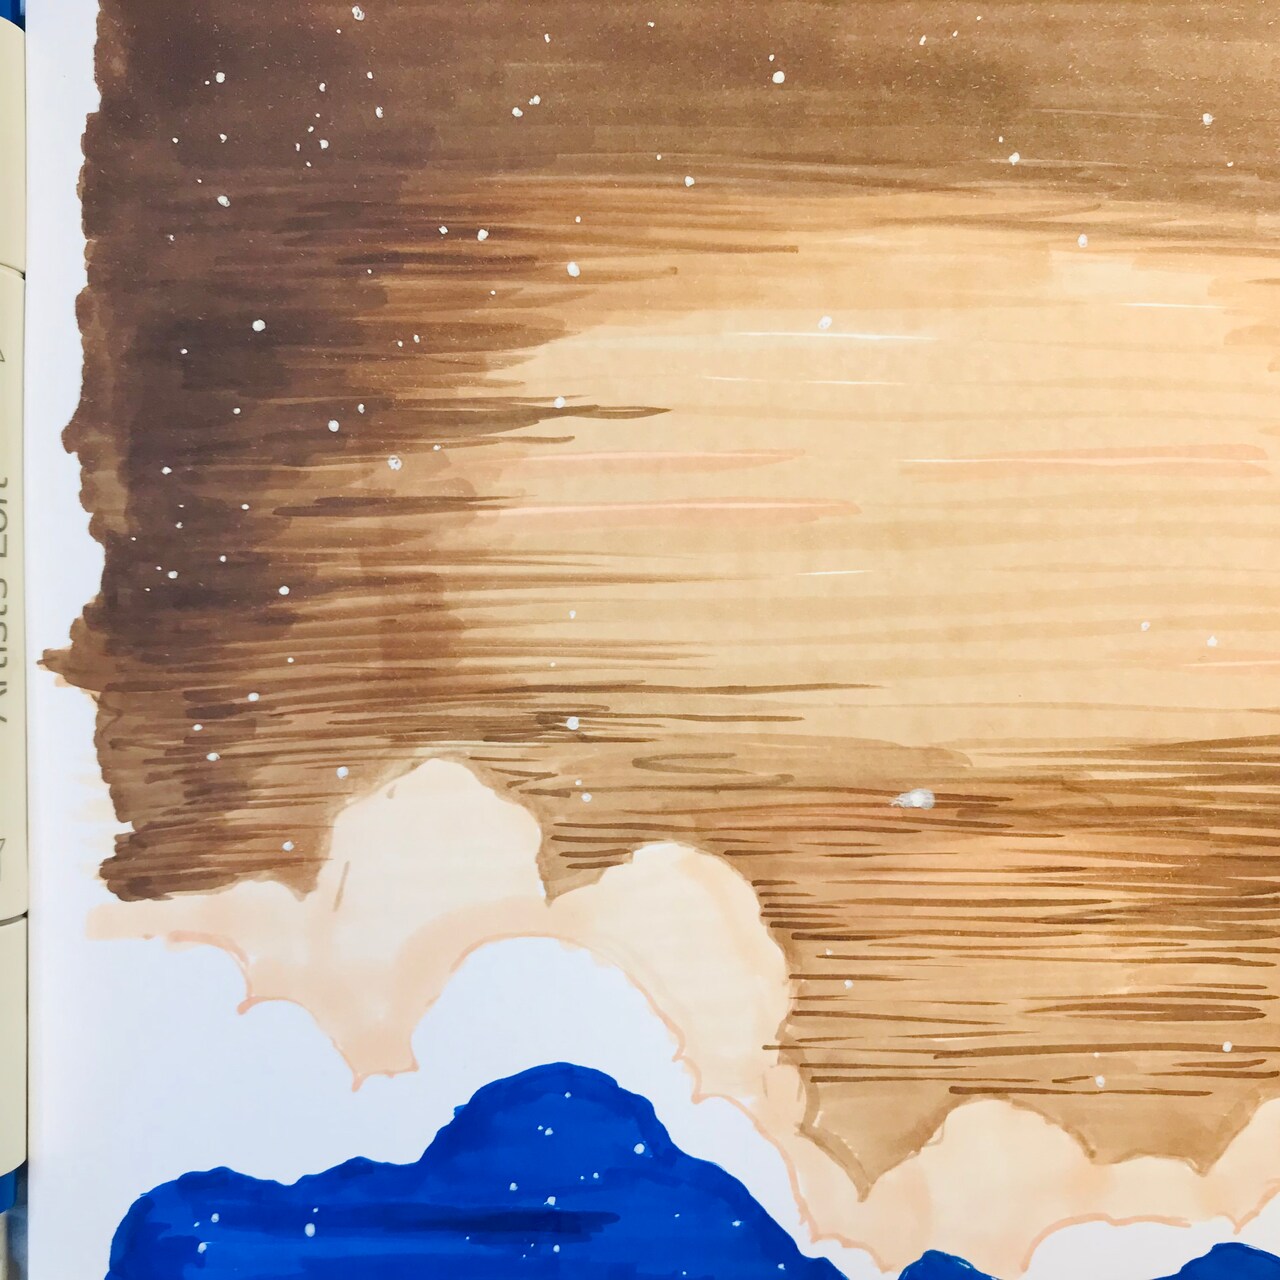 Marker Paper Pad by Artist's Loft™, 9 x 12